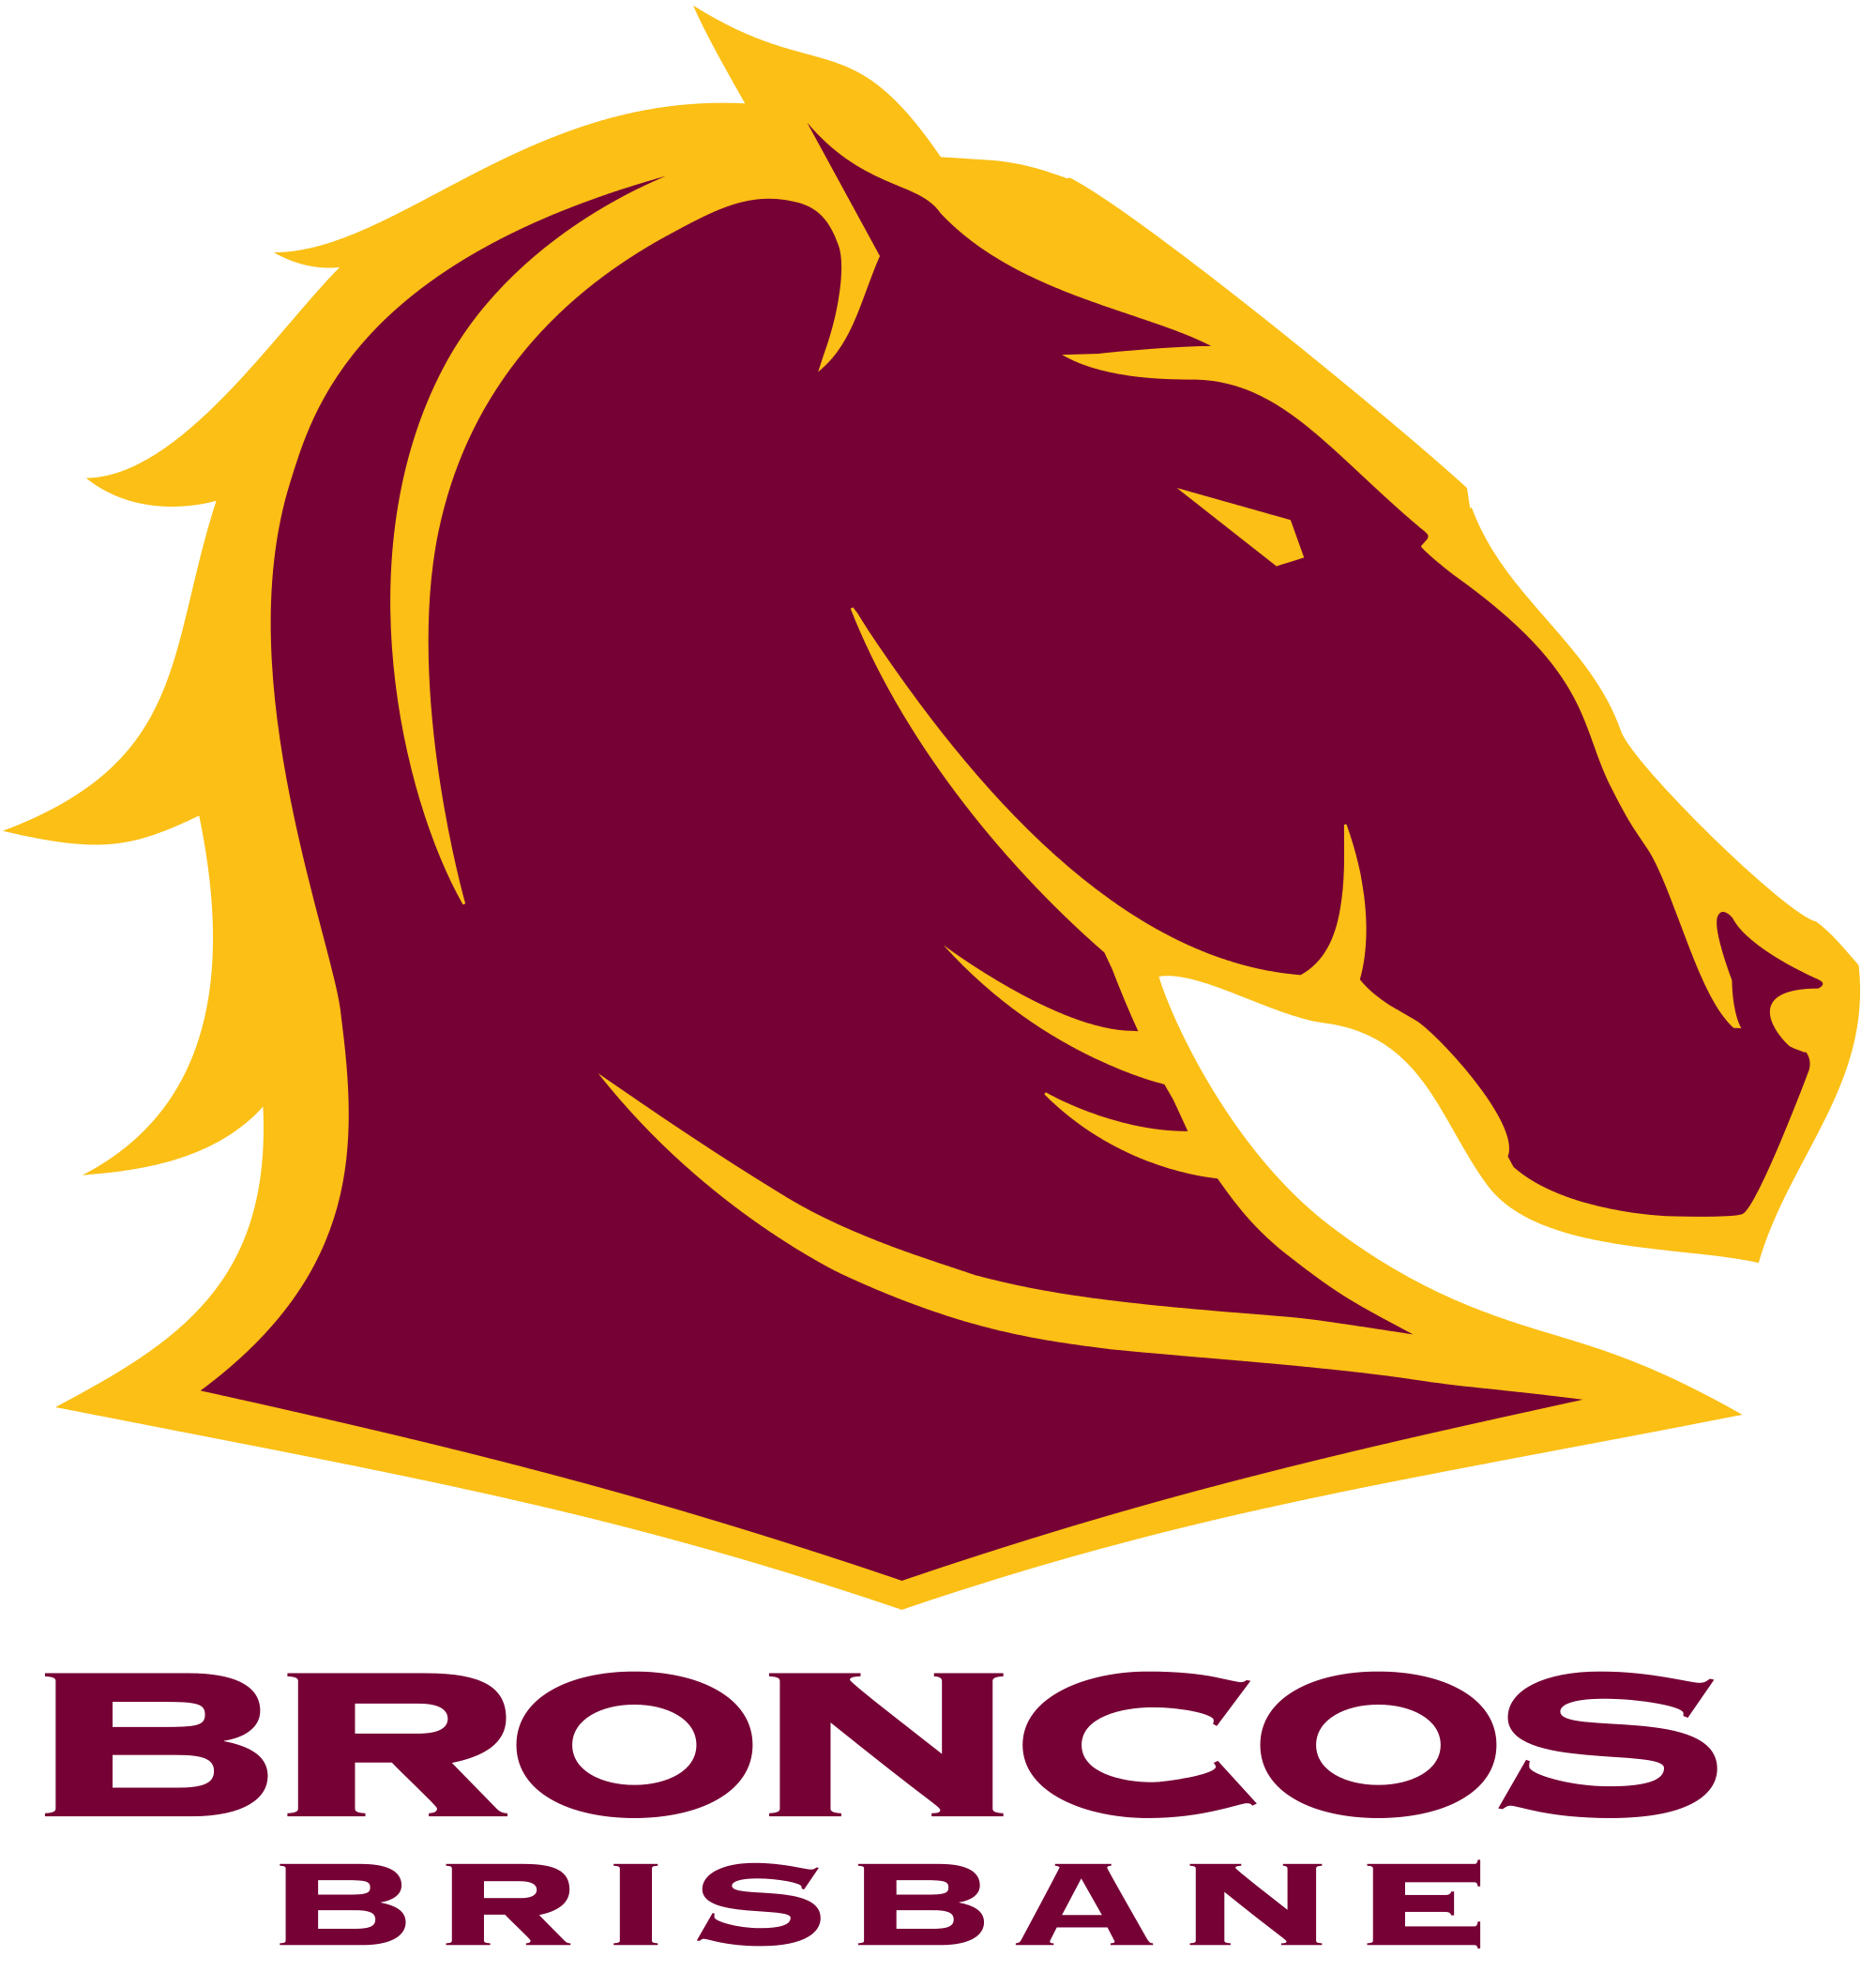 Australian Rugby Logo - Brisbane Broncos (National Rugby League of Australia) | Sports Logos ...